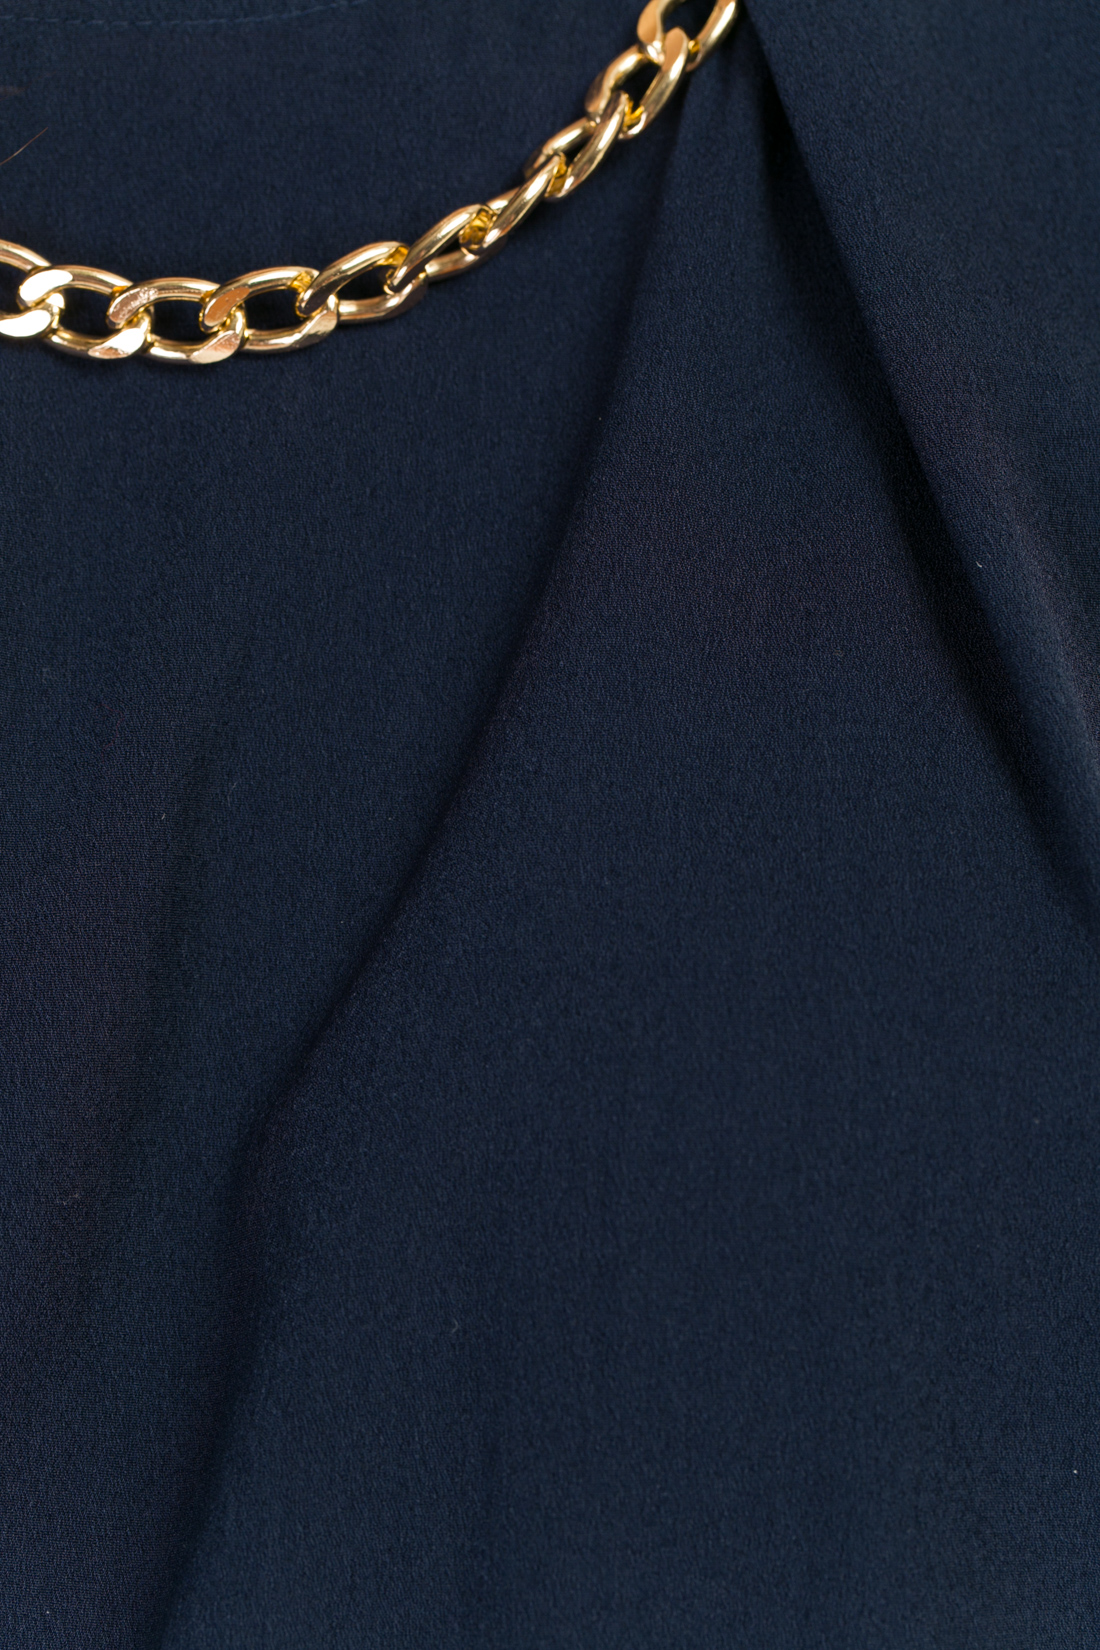 Блузка с цепочкой (арт. baon B197060), размер S, цвет синий Блузка с цепочкой (арт. baon B197060) - фото 3